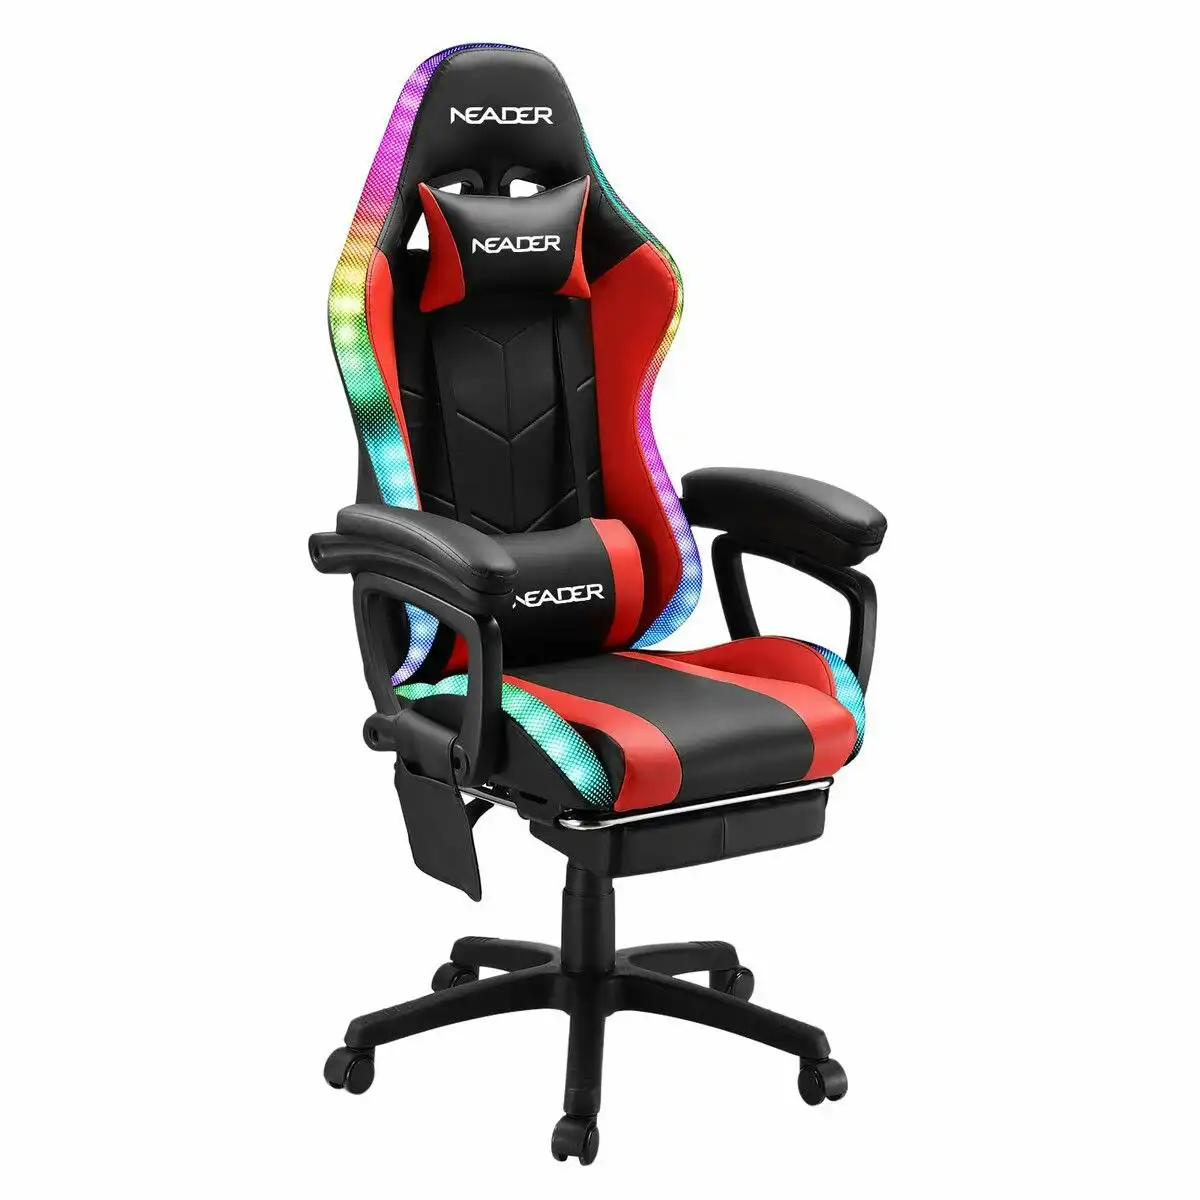 Neader RGB LED Gaming Chair Home Office Massage Computer Racing Desk Executive Armchair High Back Headrest Footrest Lumbar Pillow Seat PU Red